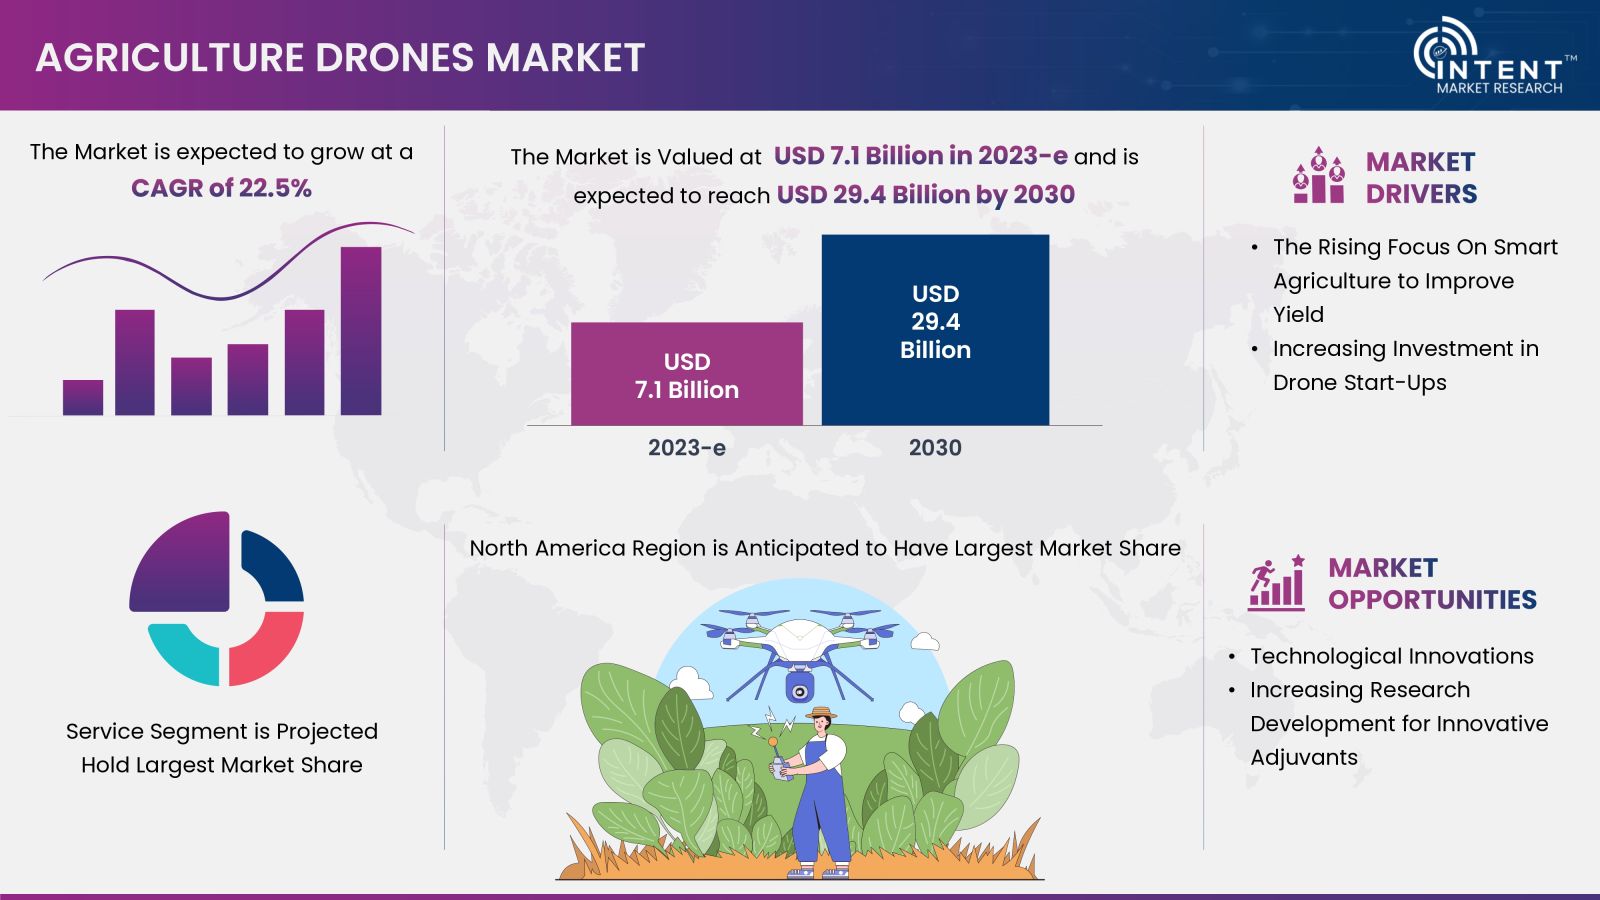 Agriculture Drones Market